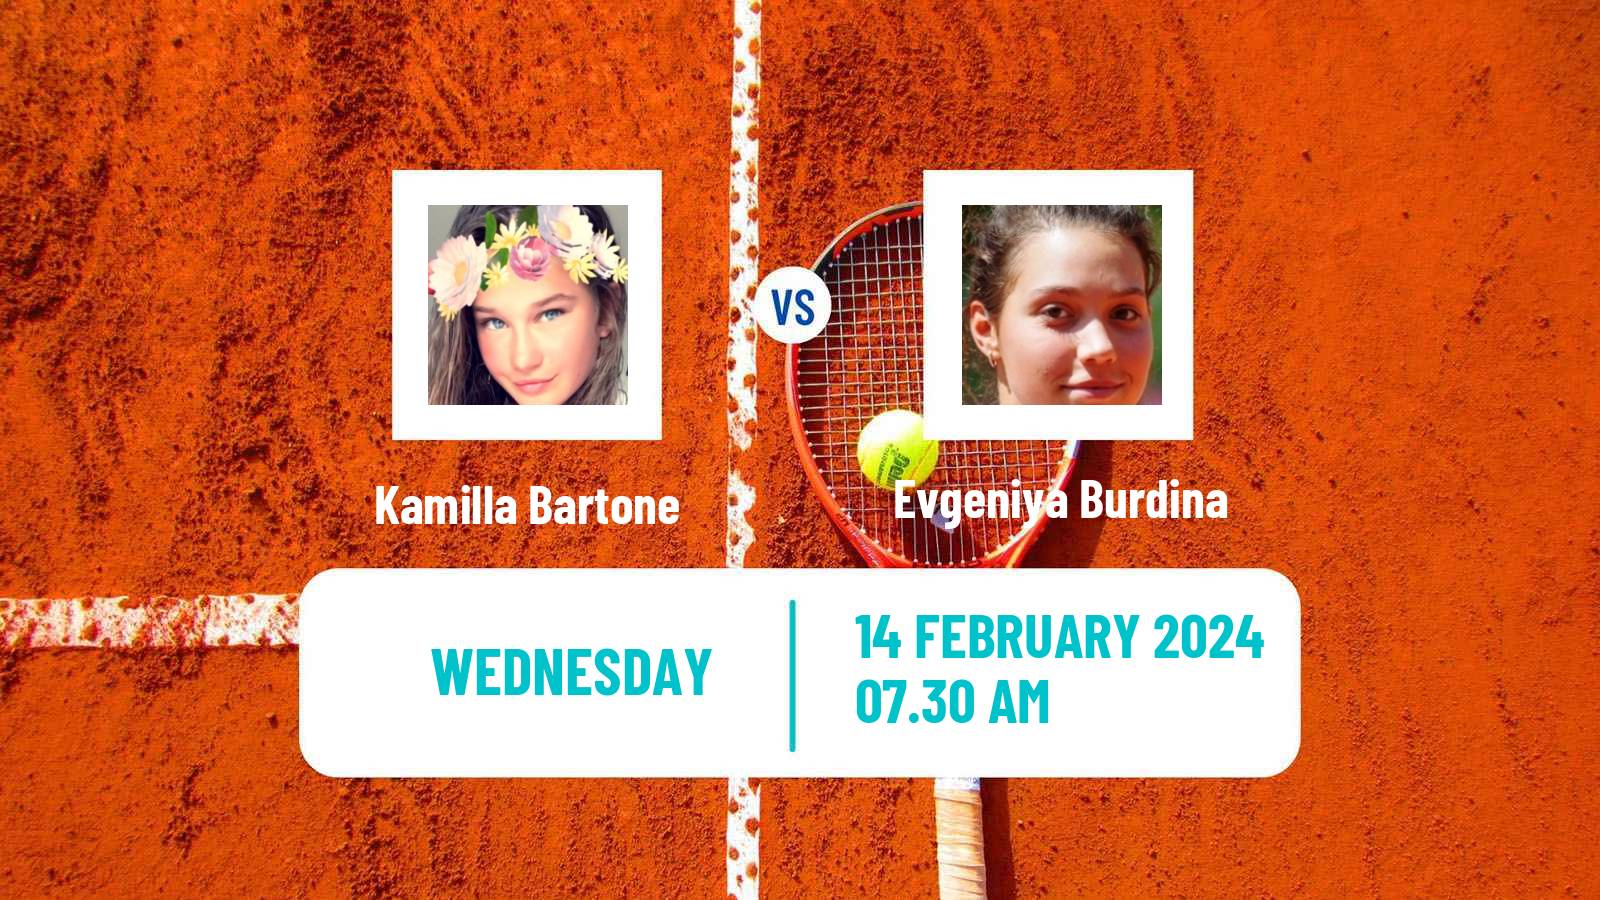 Tennis ITF W15 Sharm Elsheikh 2 Women Kamilla Bartone - Evgeniya Burdina